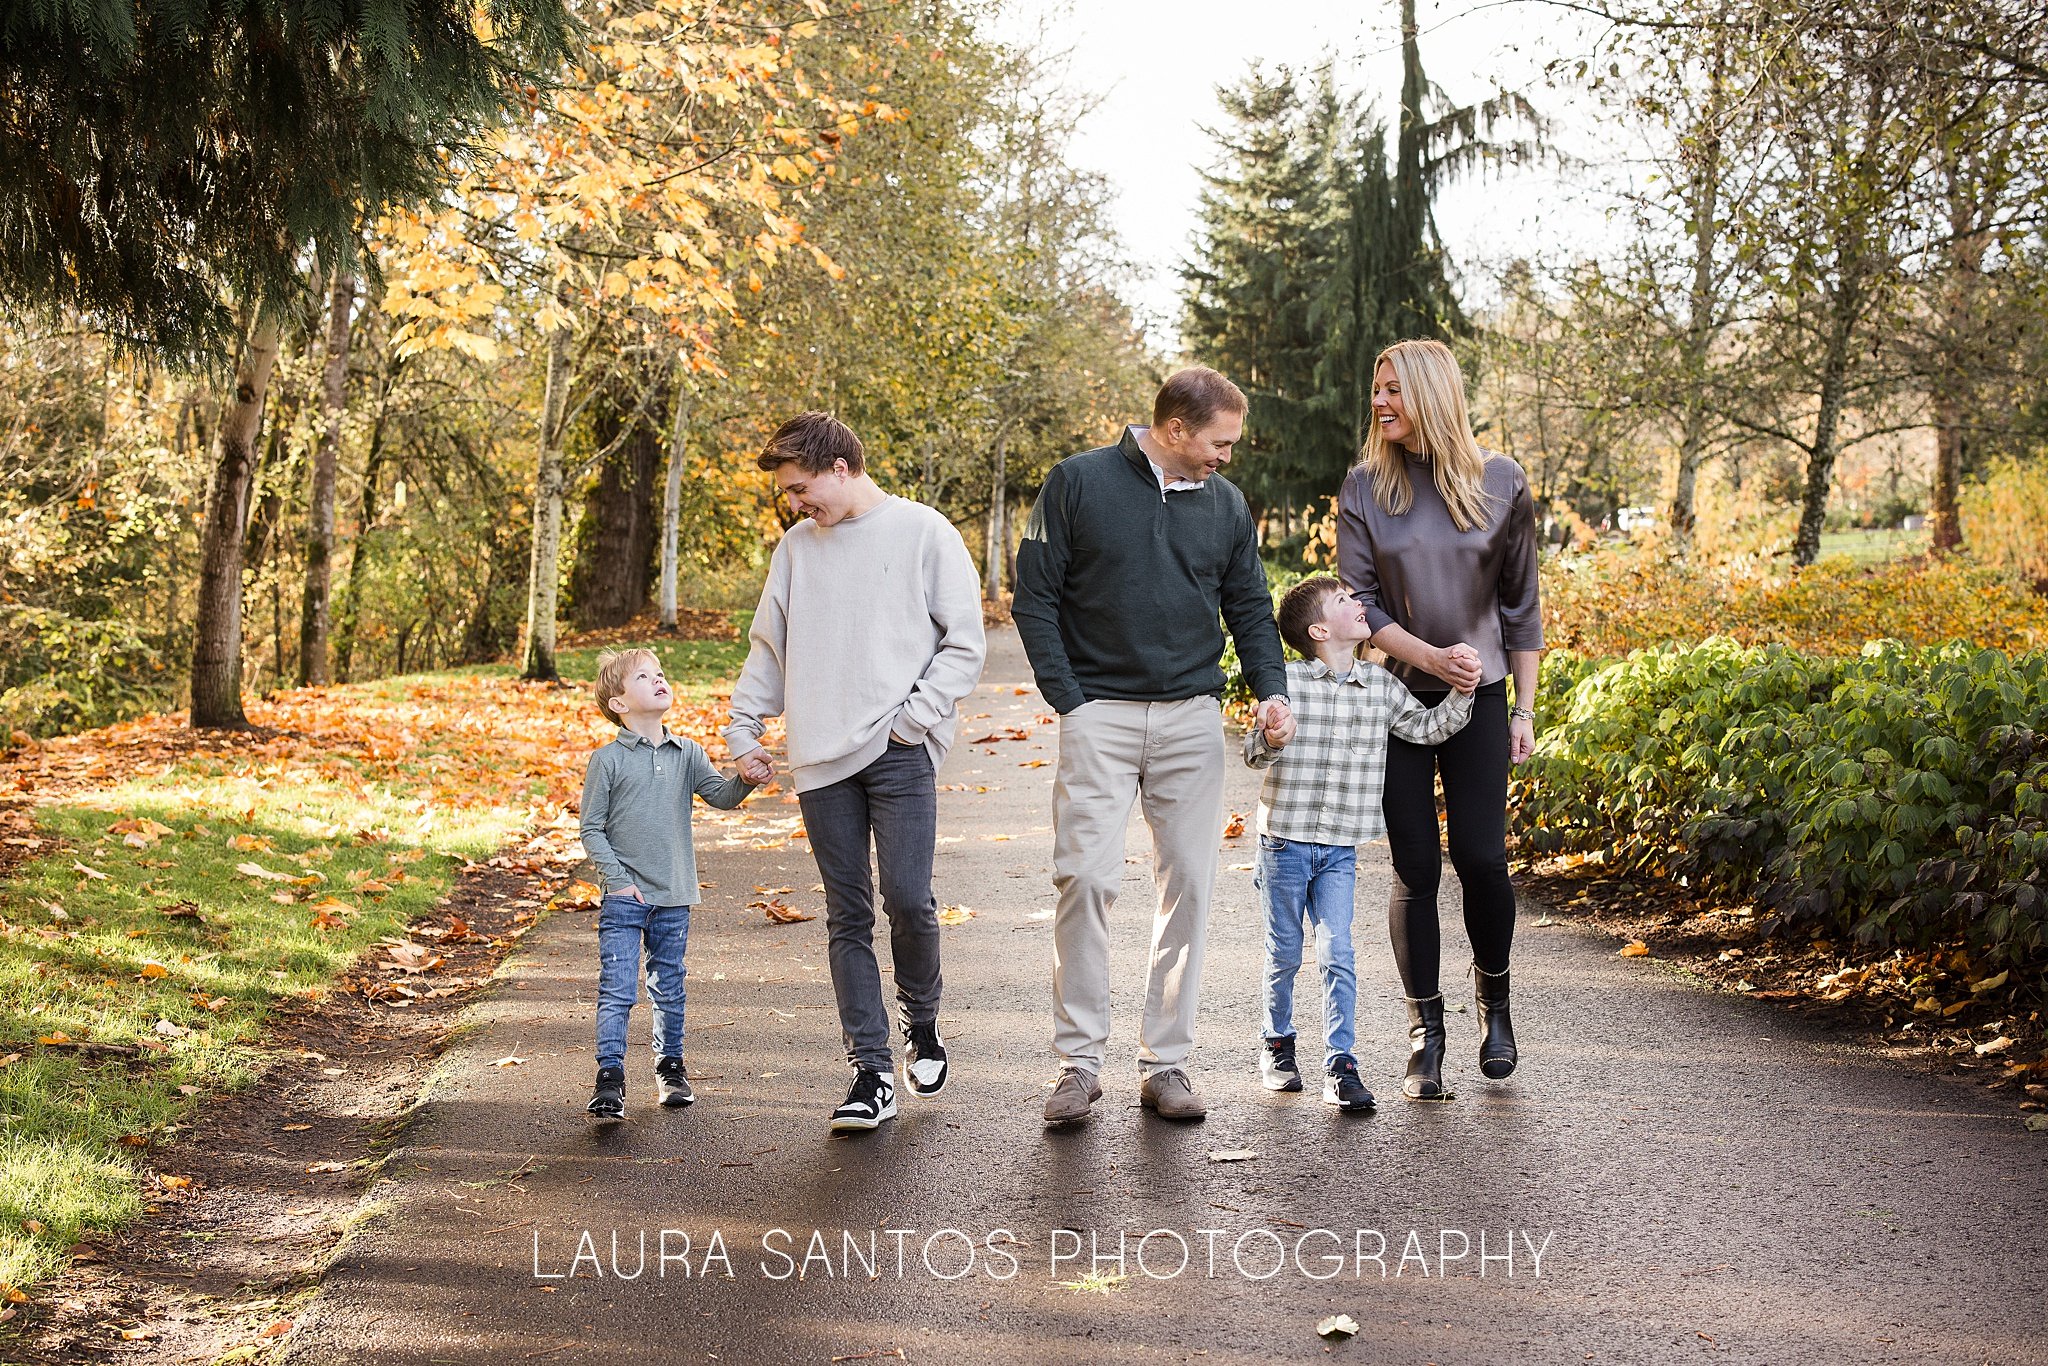 Laura Santos Photography Portland Oregon Family Photographer_4420.jpg